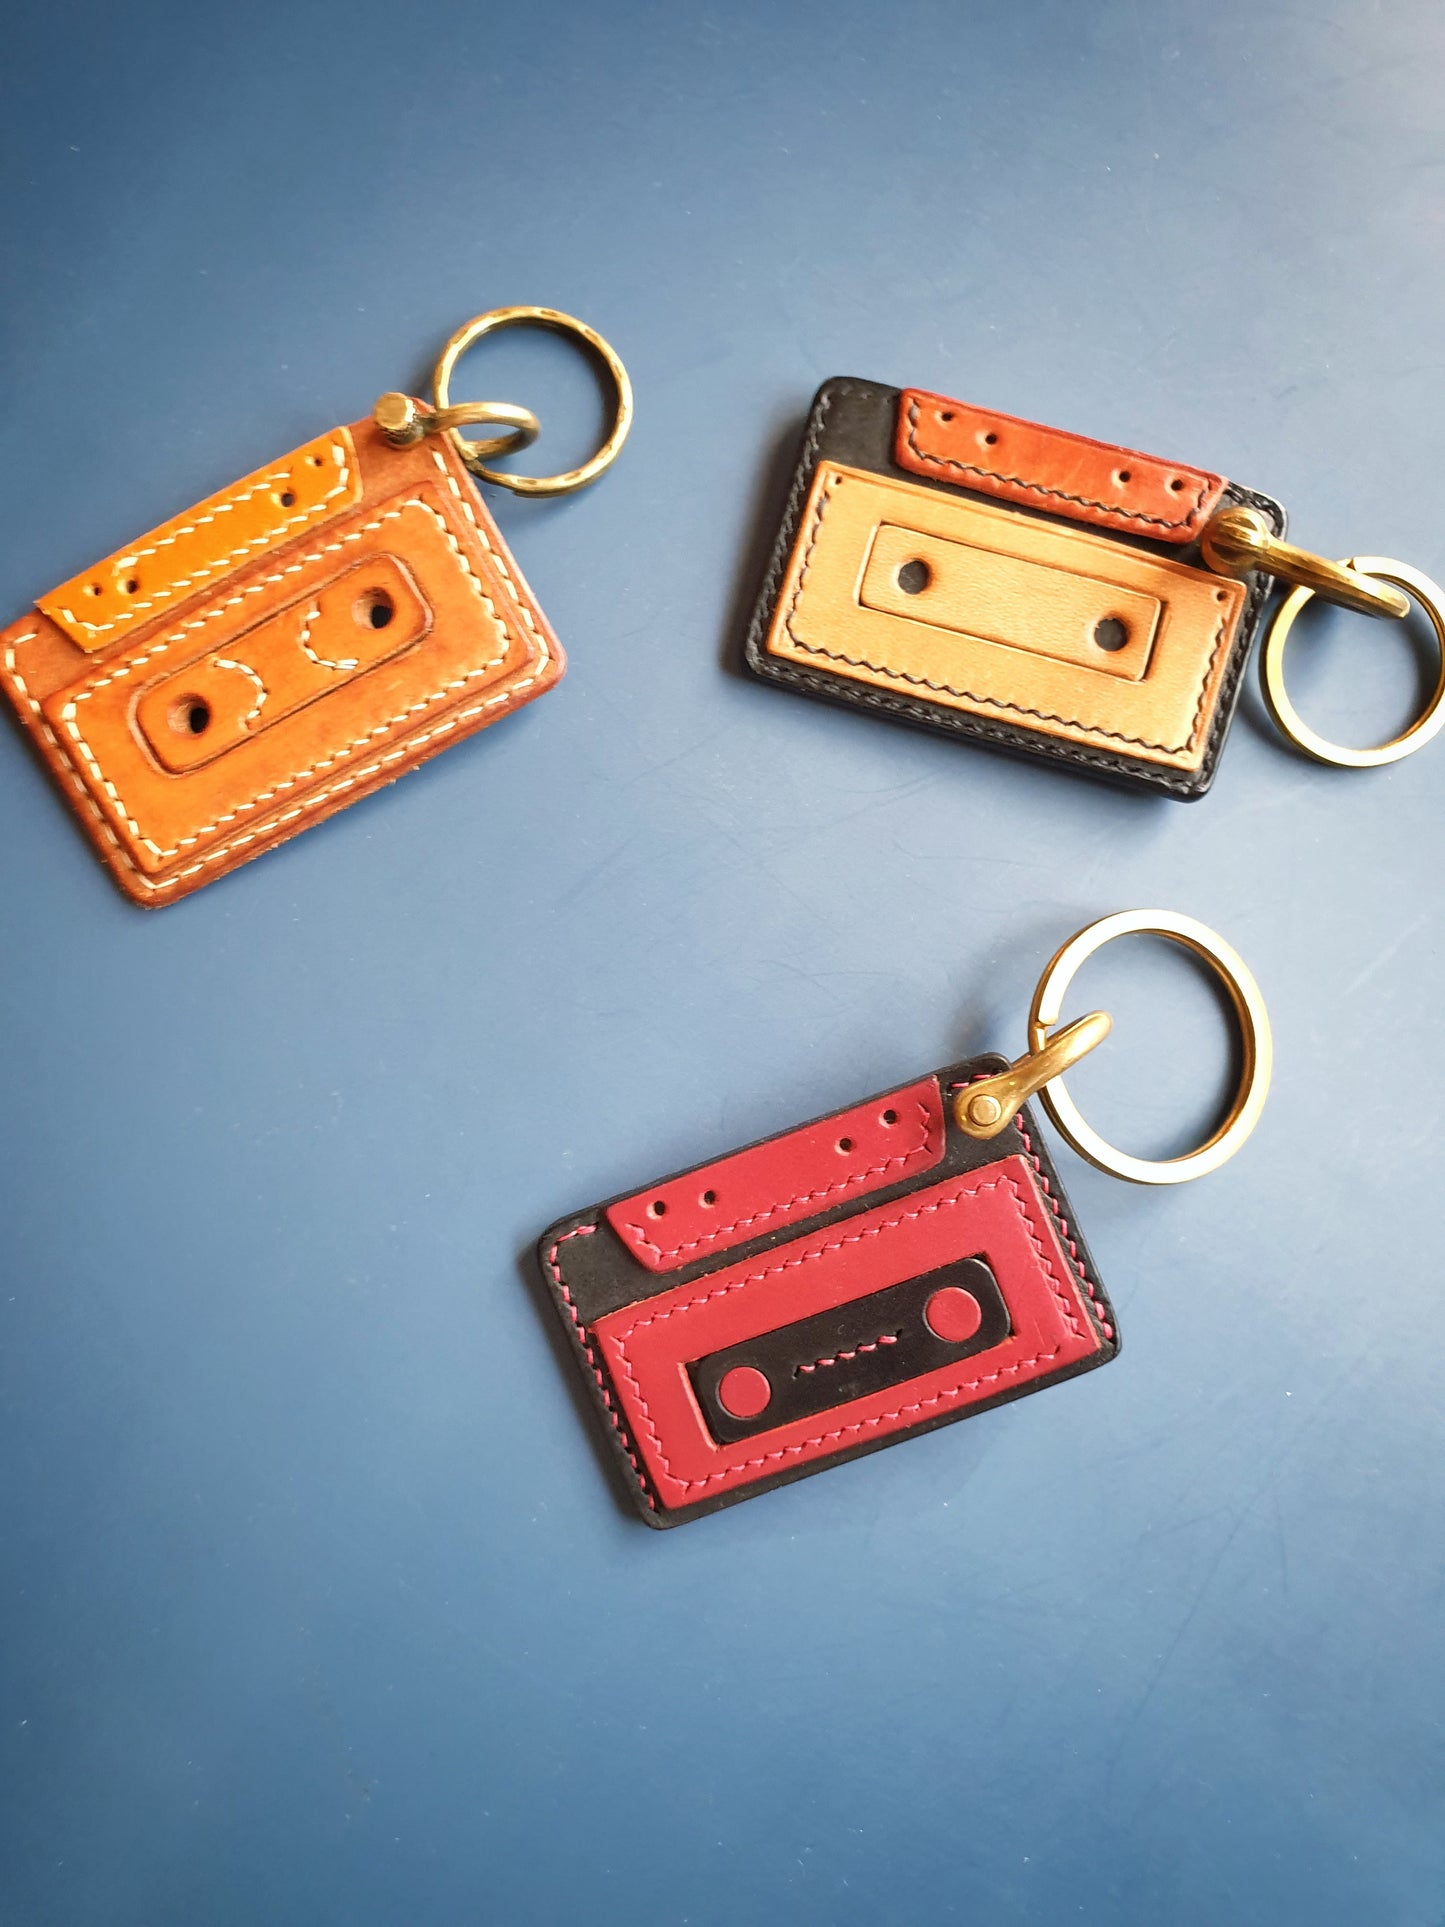 Retro key fobs - cassette